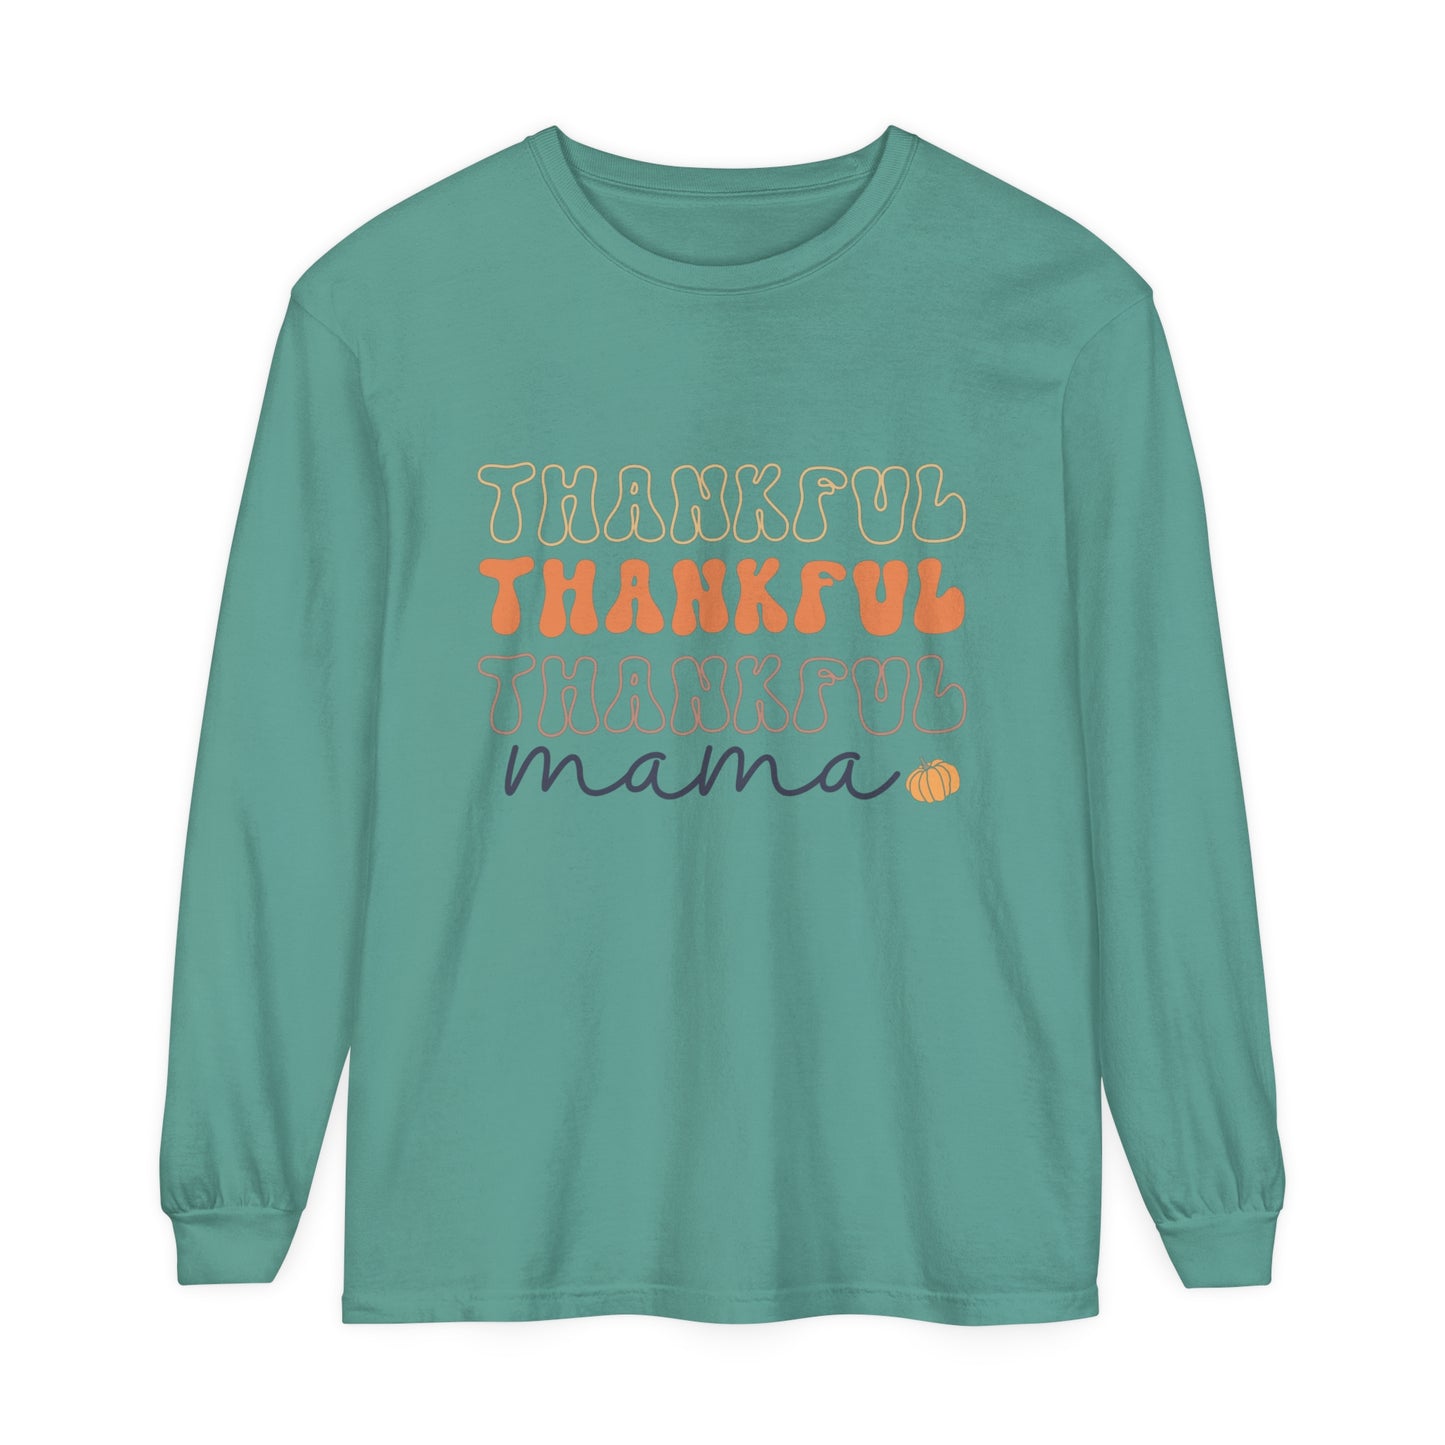 Style 1 Thankful Mama Loose Long Sleeve T-Shirt